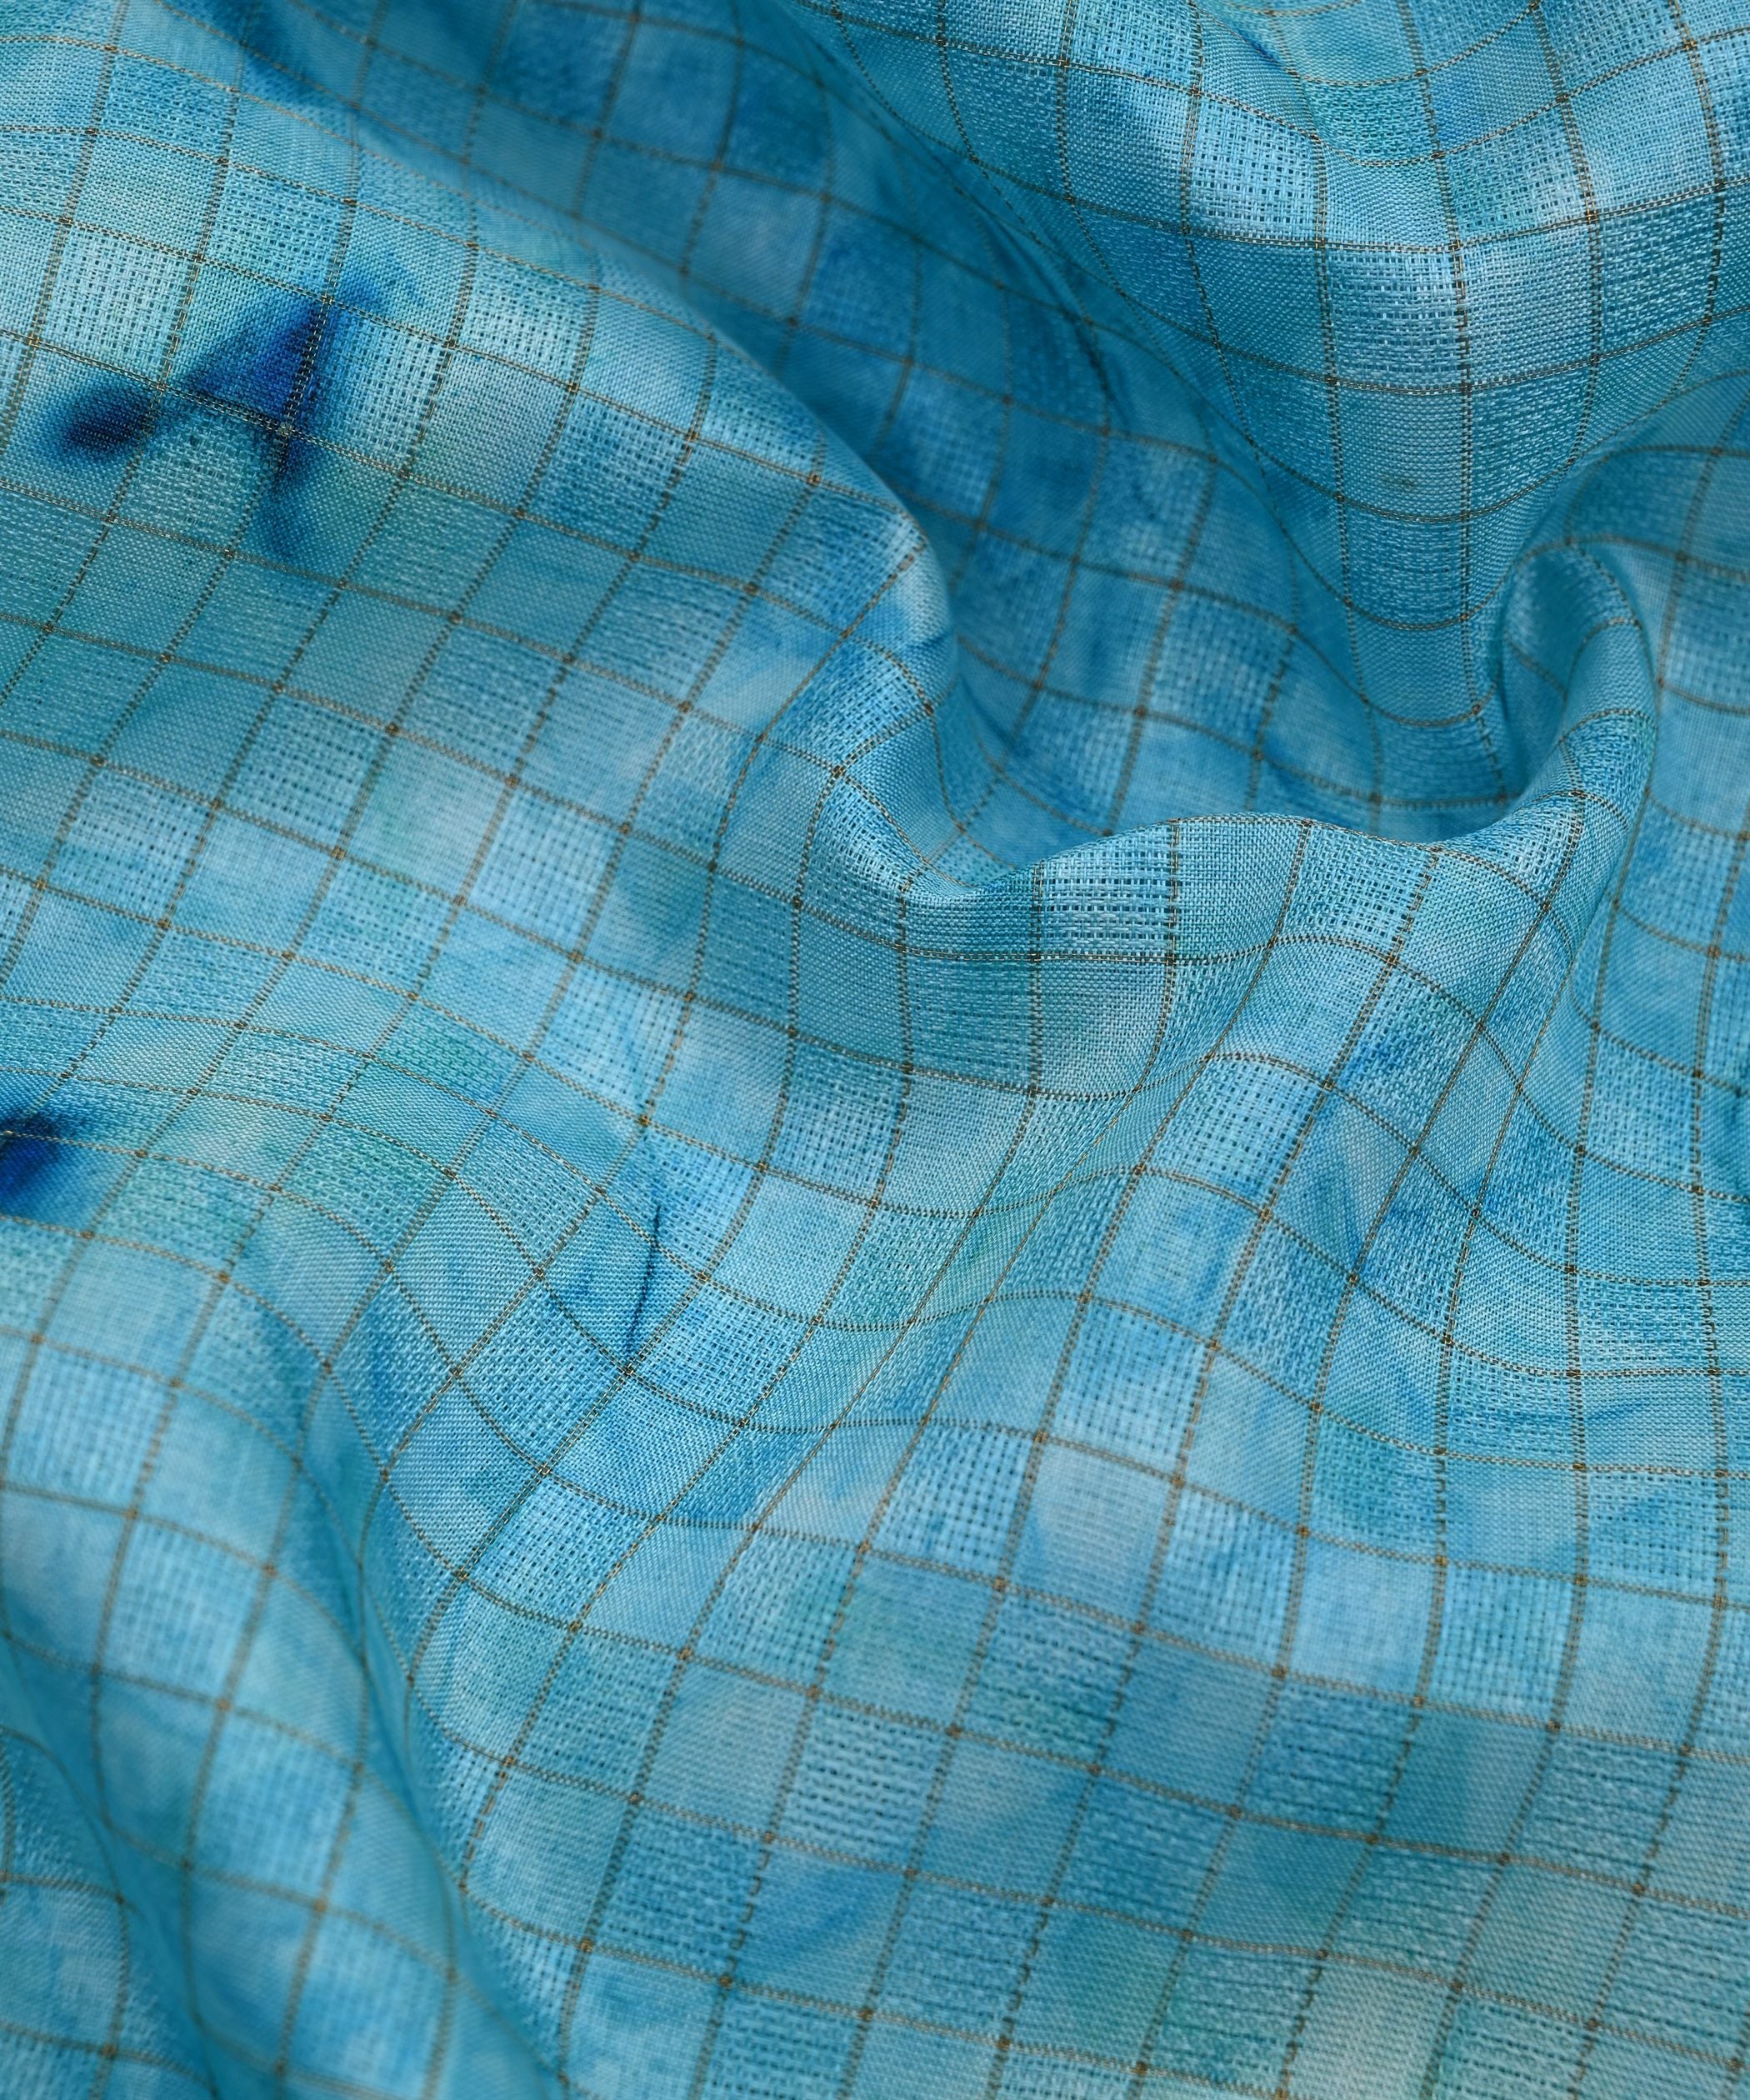 Sky Blue Jute Fabric with Checks and Shibori Print